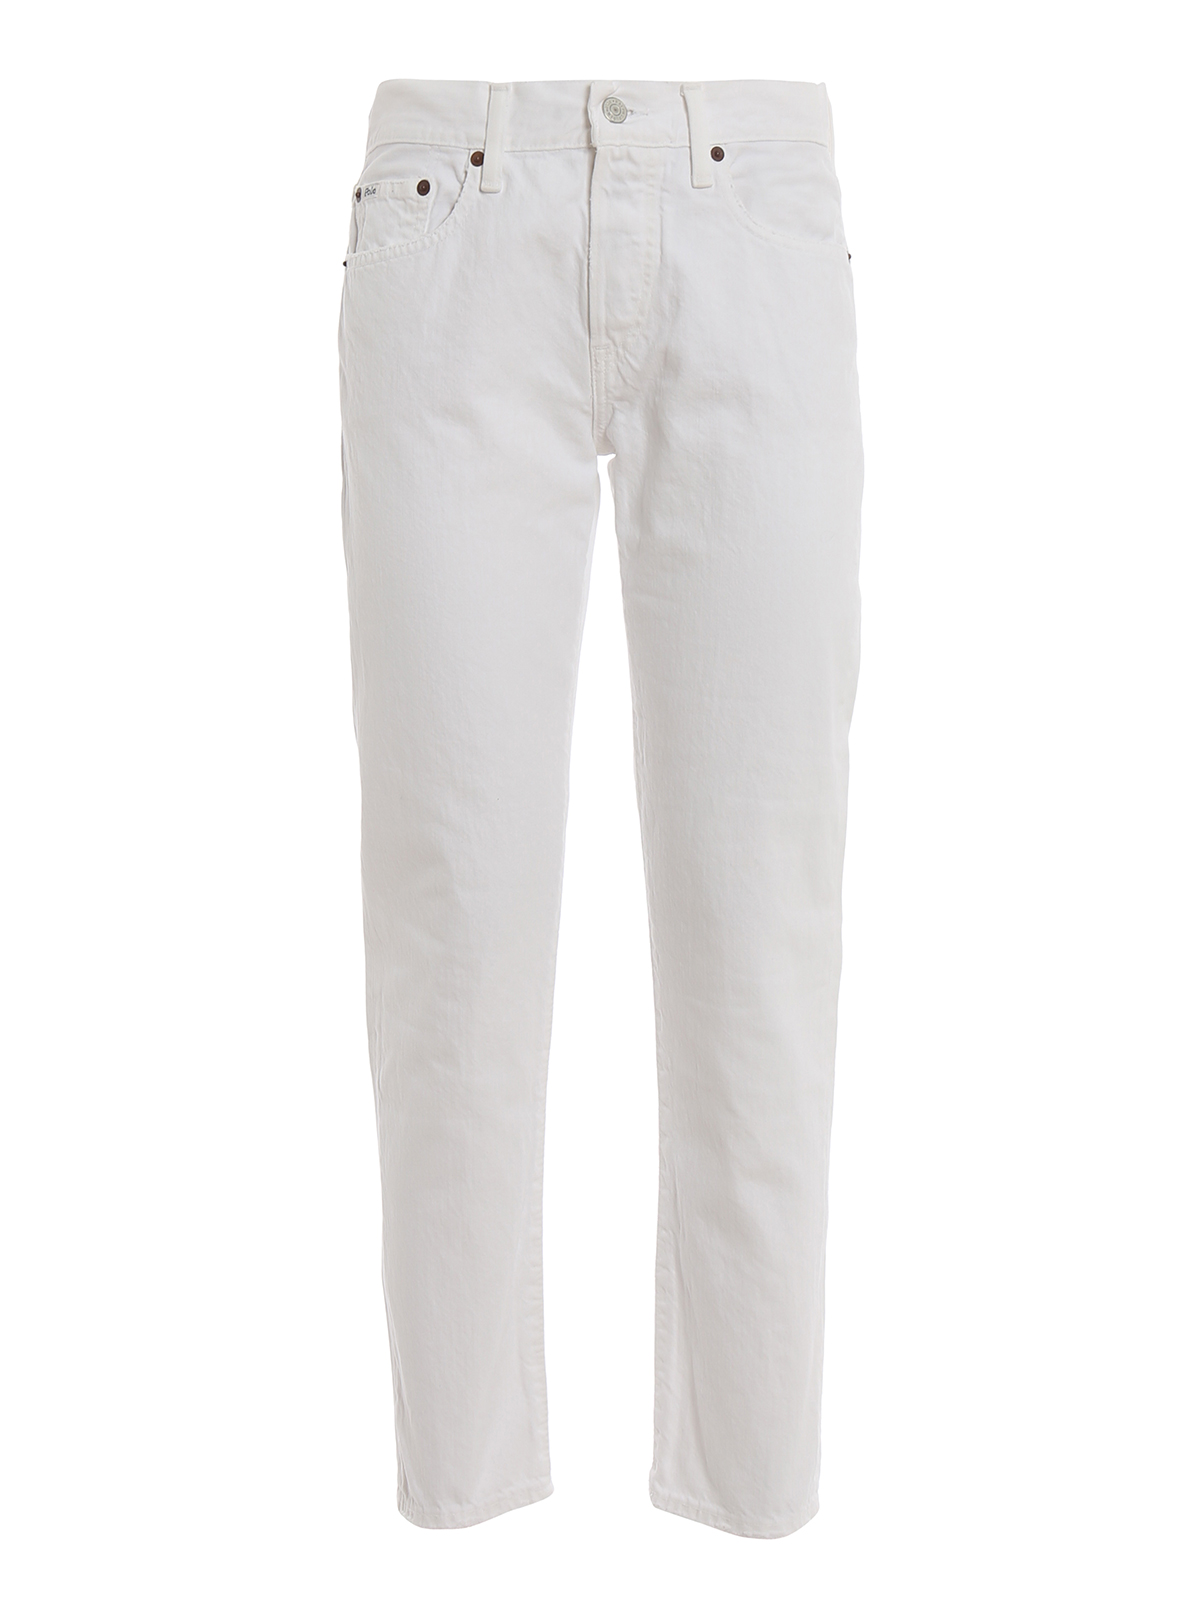 Polo Ralph Lauren - The Avery white boyfriend jeans - Boyfriend ...